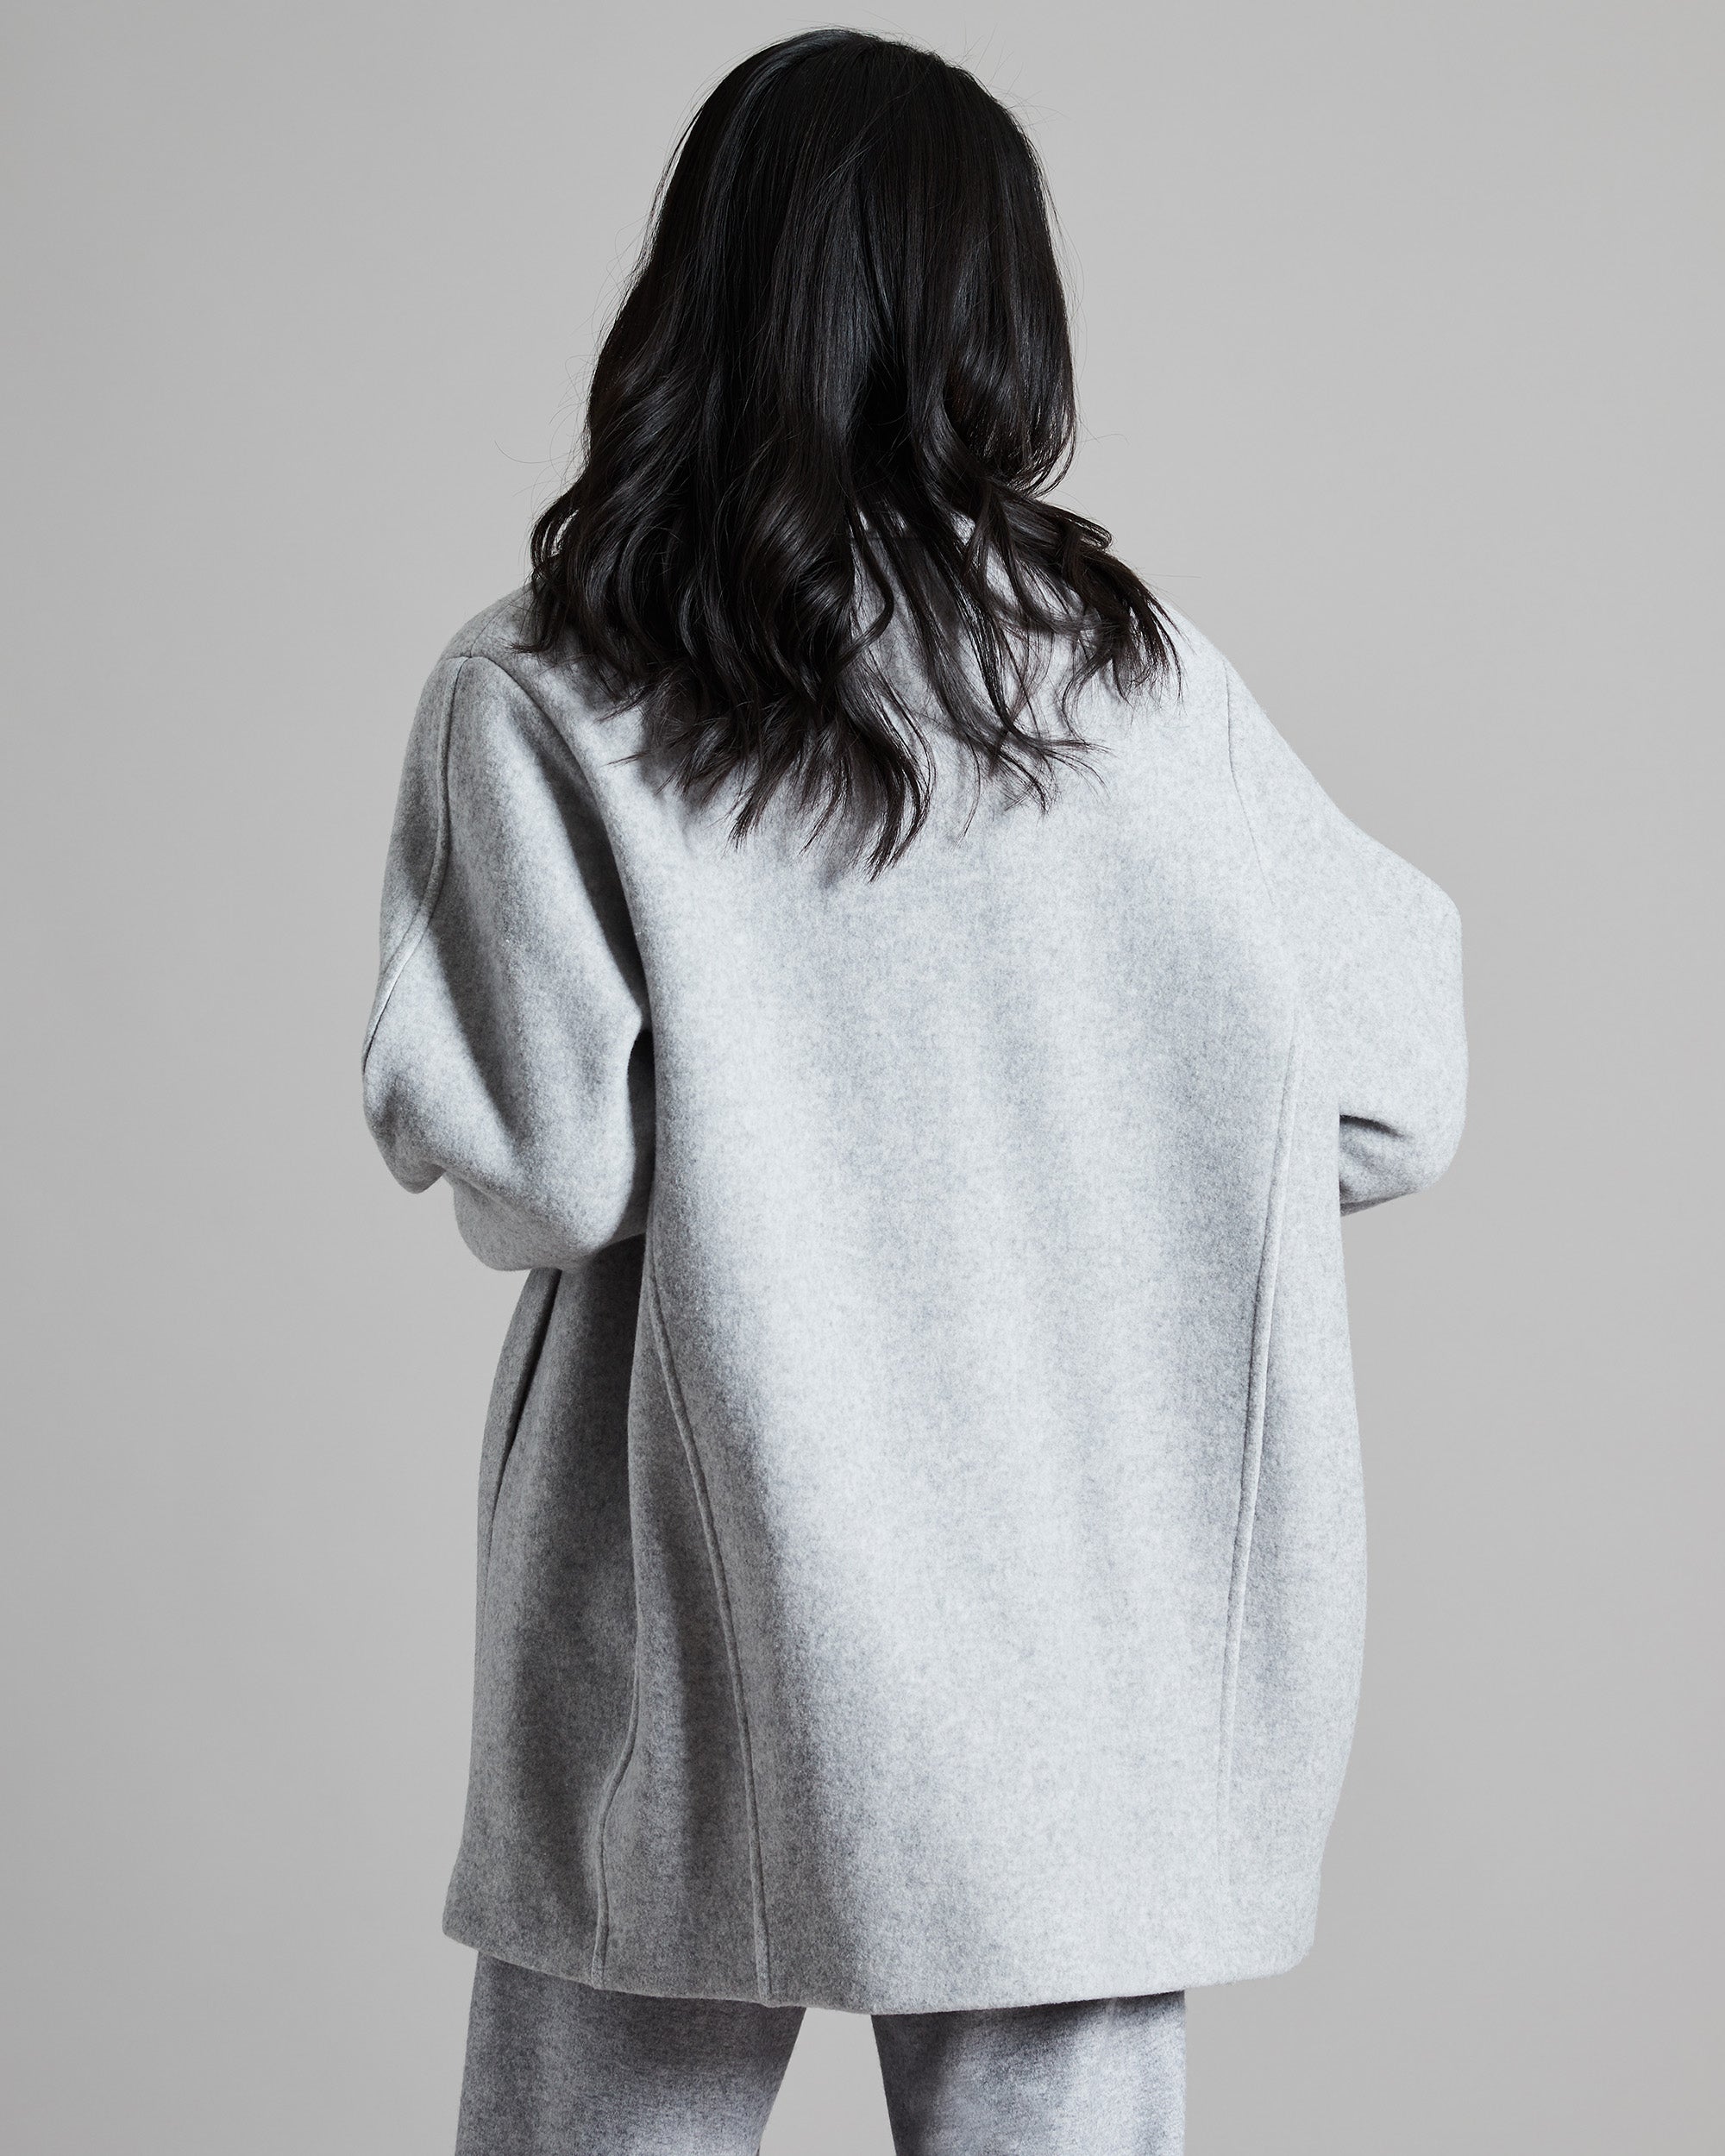 Outerwear in cashmere fleece